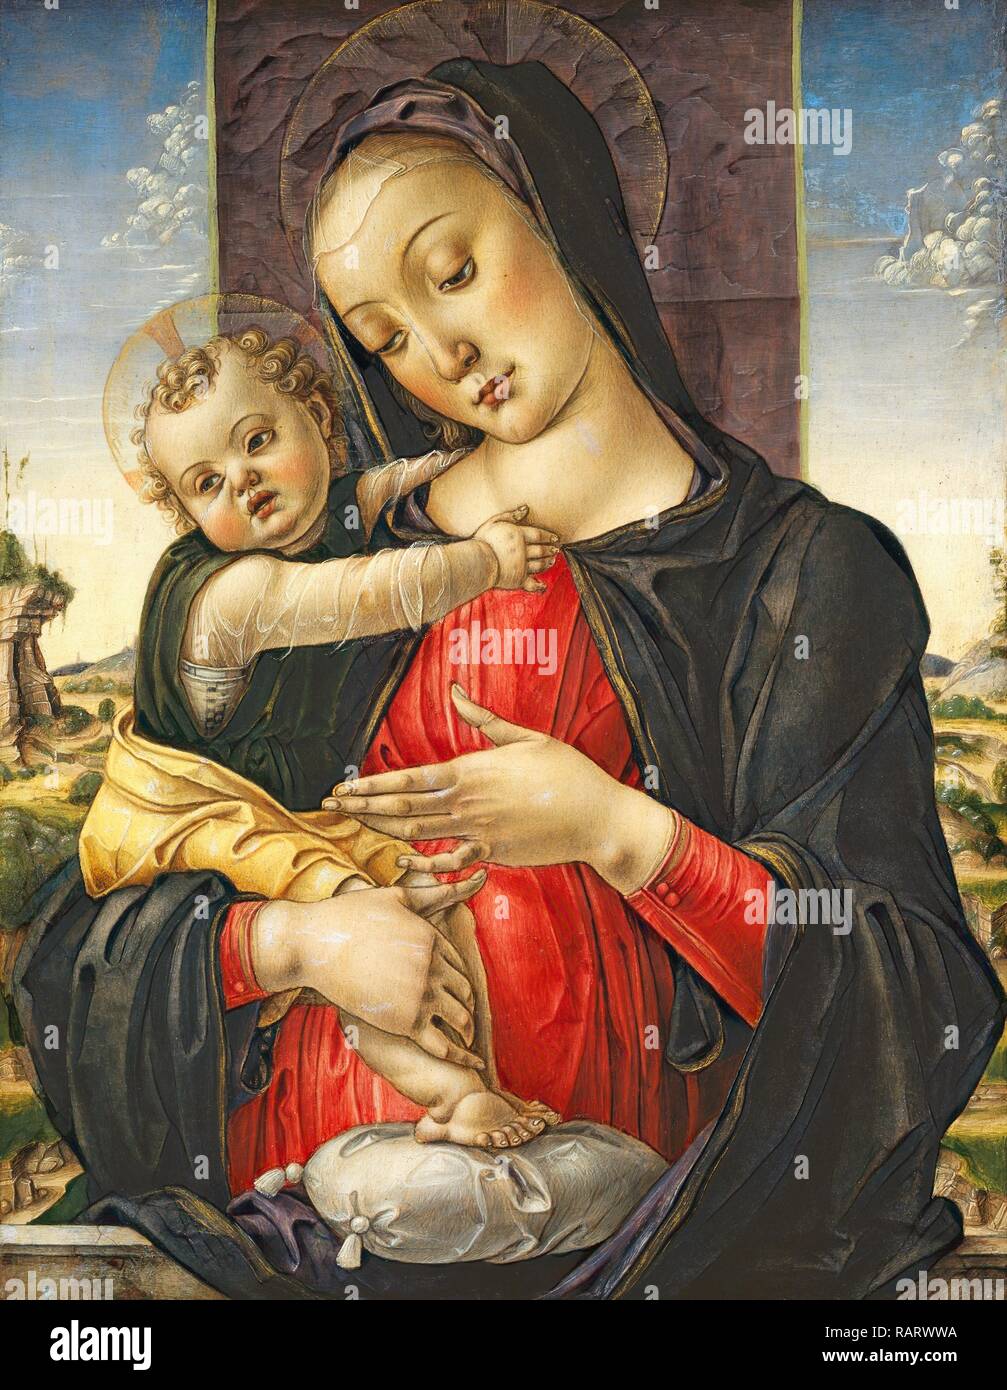 Bartolomeo Vivarini, Madonna and Child, Italian, c. 1430-1432-c. 1491 or c. 1499, c. 1475, tempera on panel reimagined Stock Photo